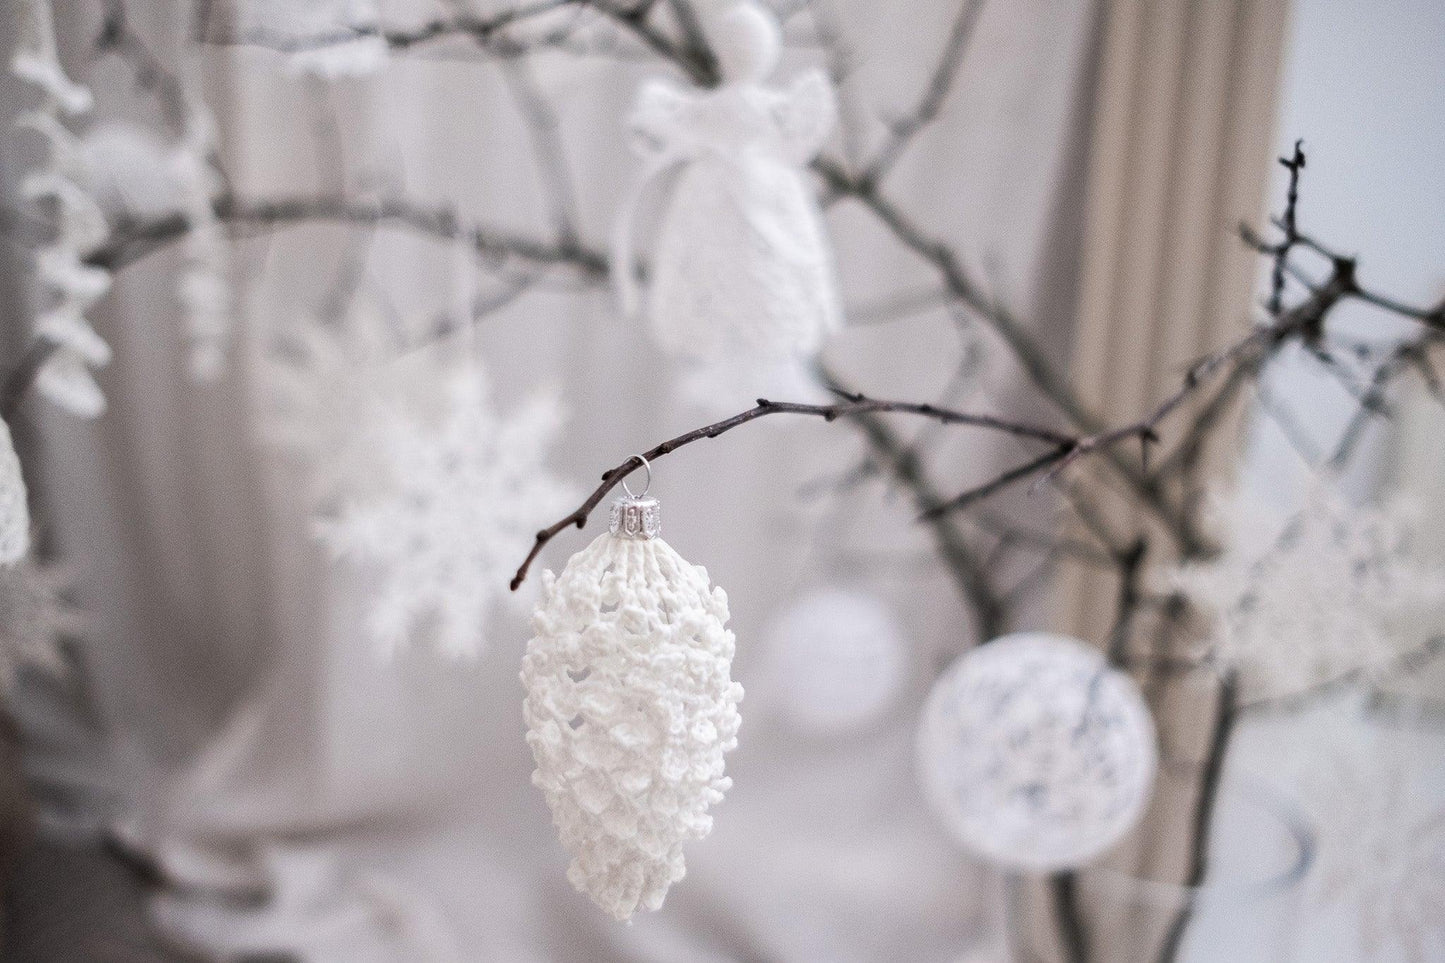 Handmade Crocheted Christmas Ornaments